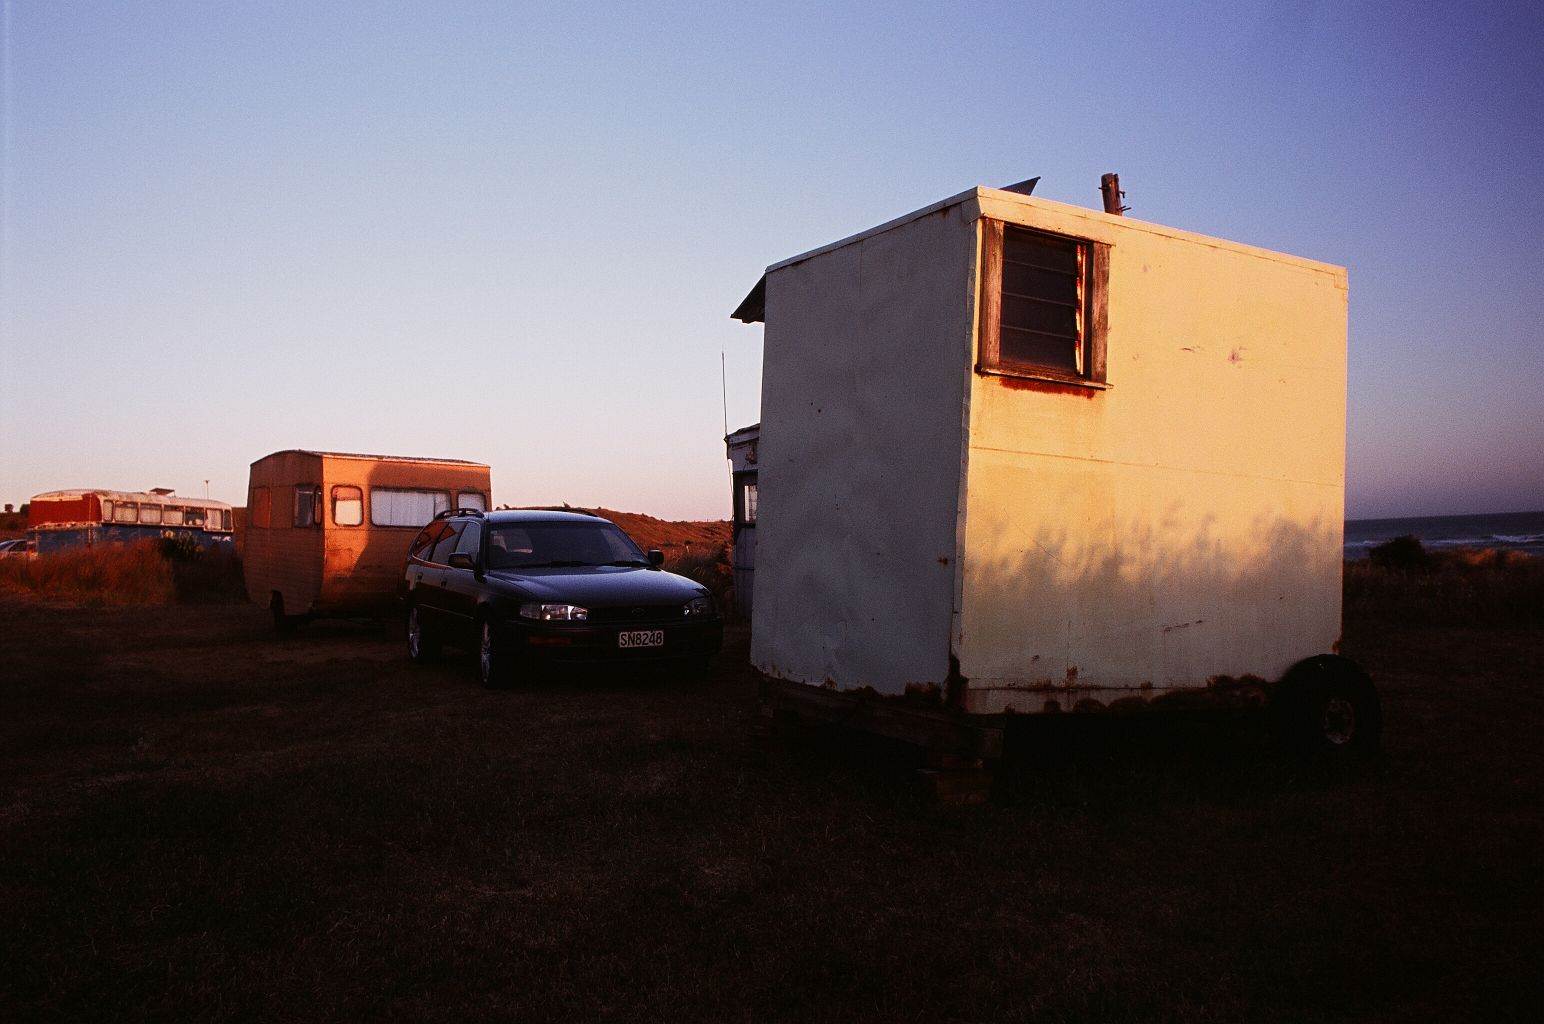 fotka / image informal campsite na Waiia beach, z Aucklandu do Wellingtonu